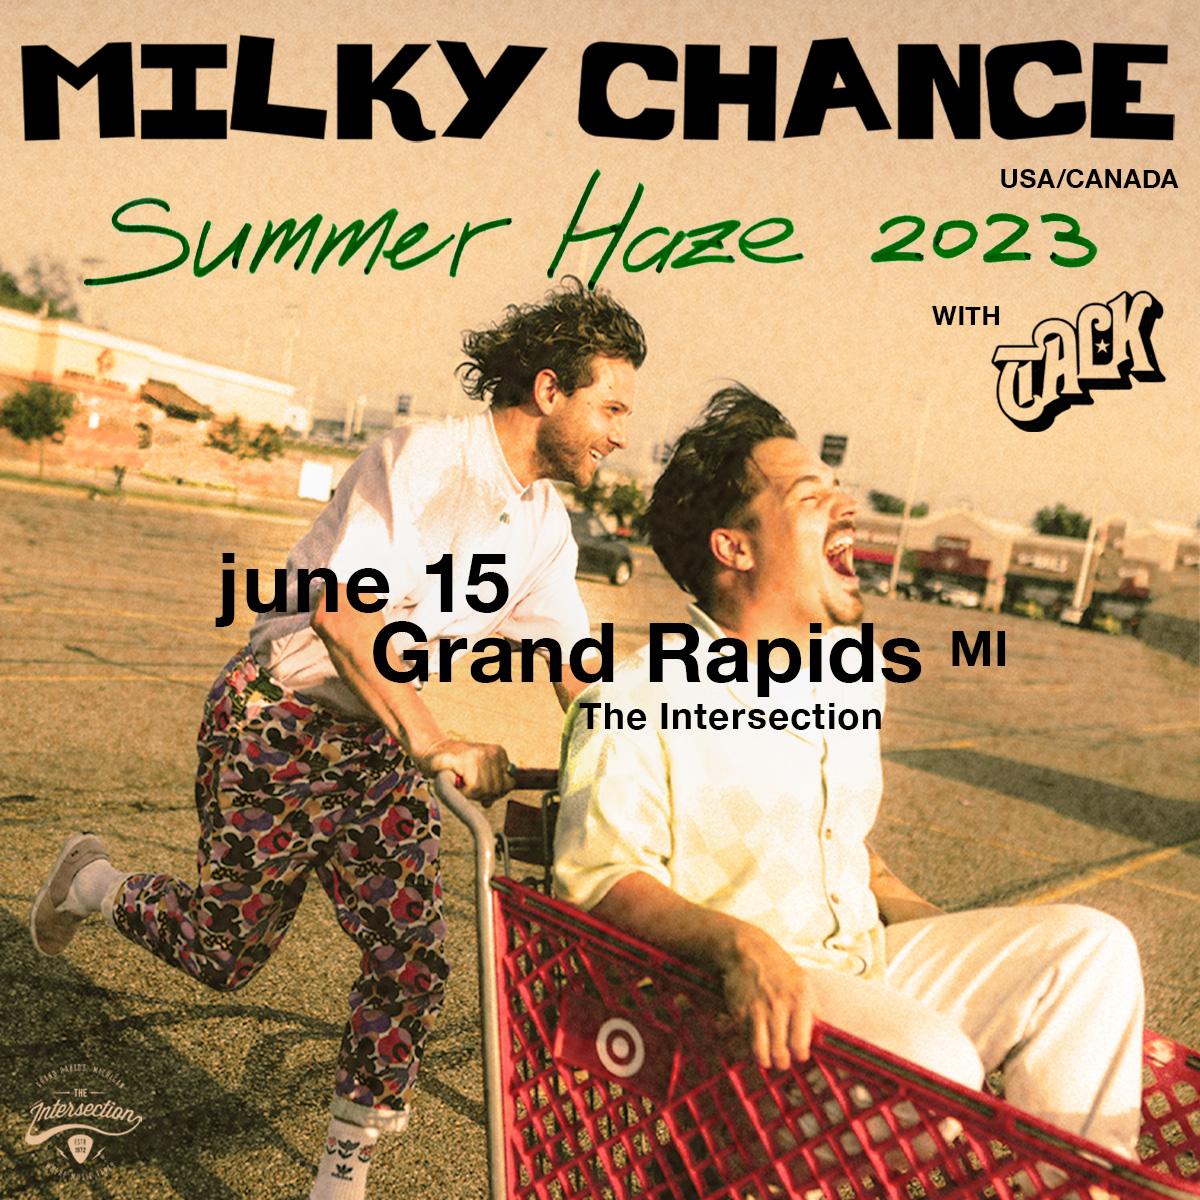 milky chance tour schedule 2023